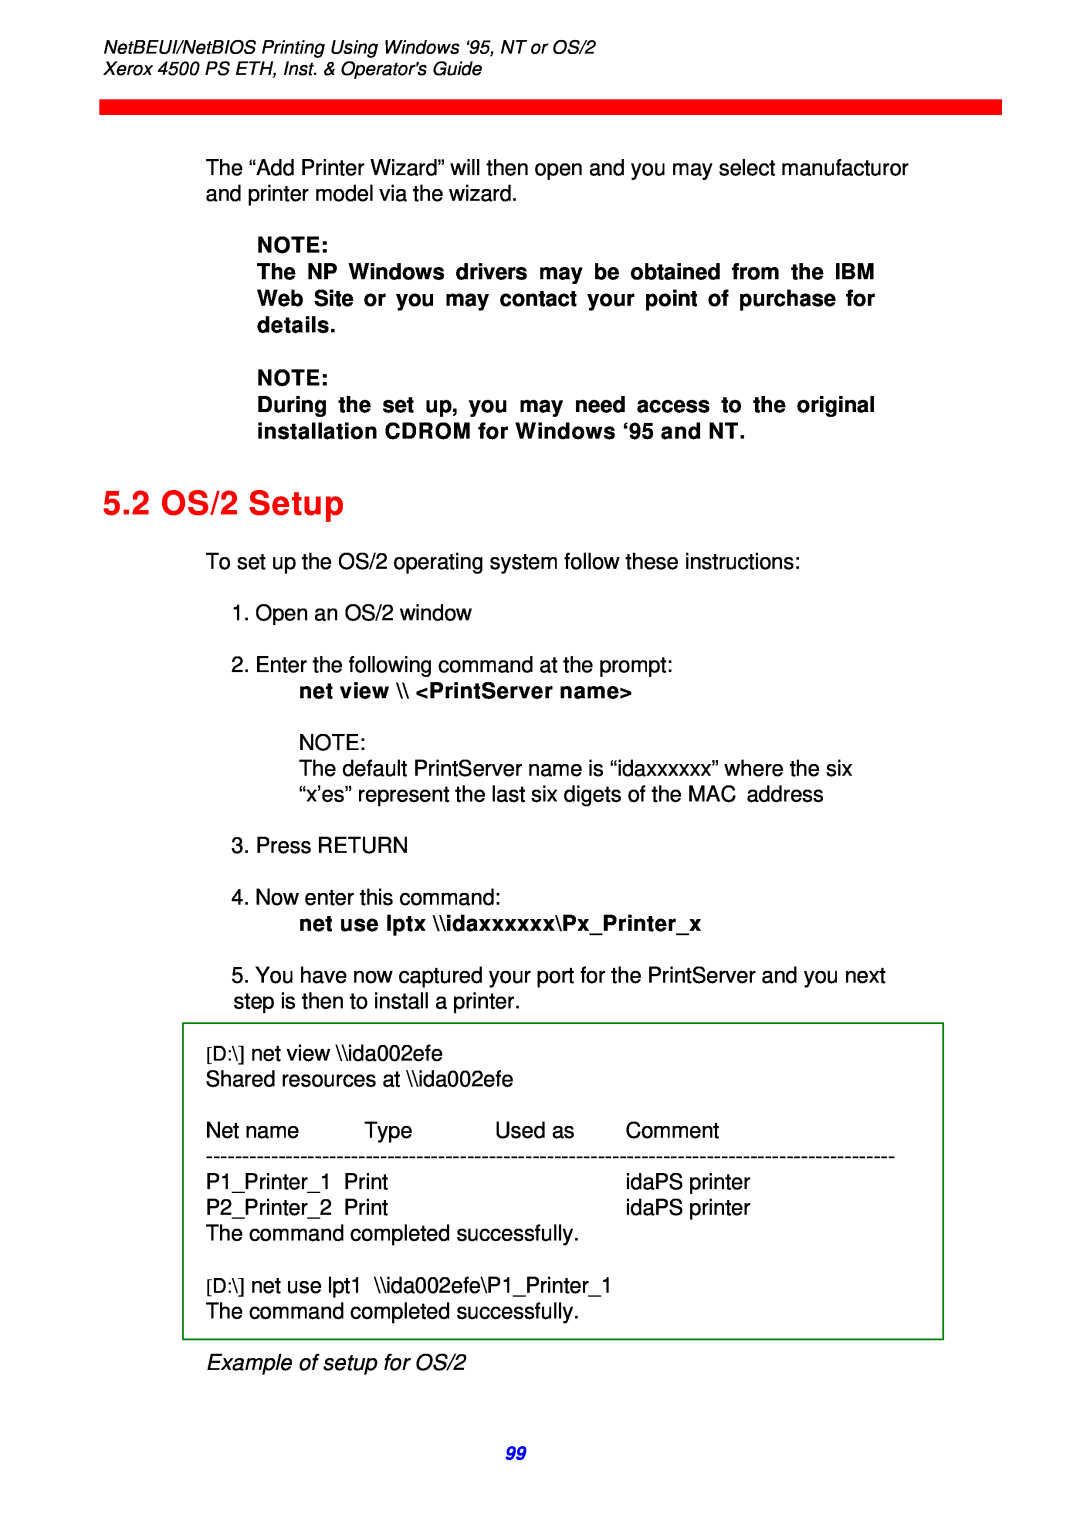 Xerox 4500 ps eth instruction manual 5.2 OS/2 Setup, net use lptx \\idaxxxxxx\PxPrinterx, Example of setup for OS/2 